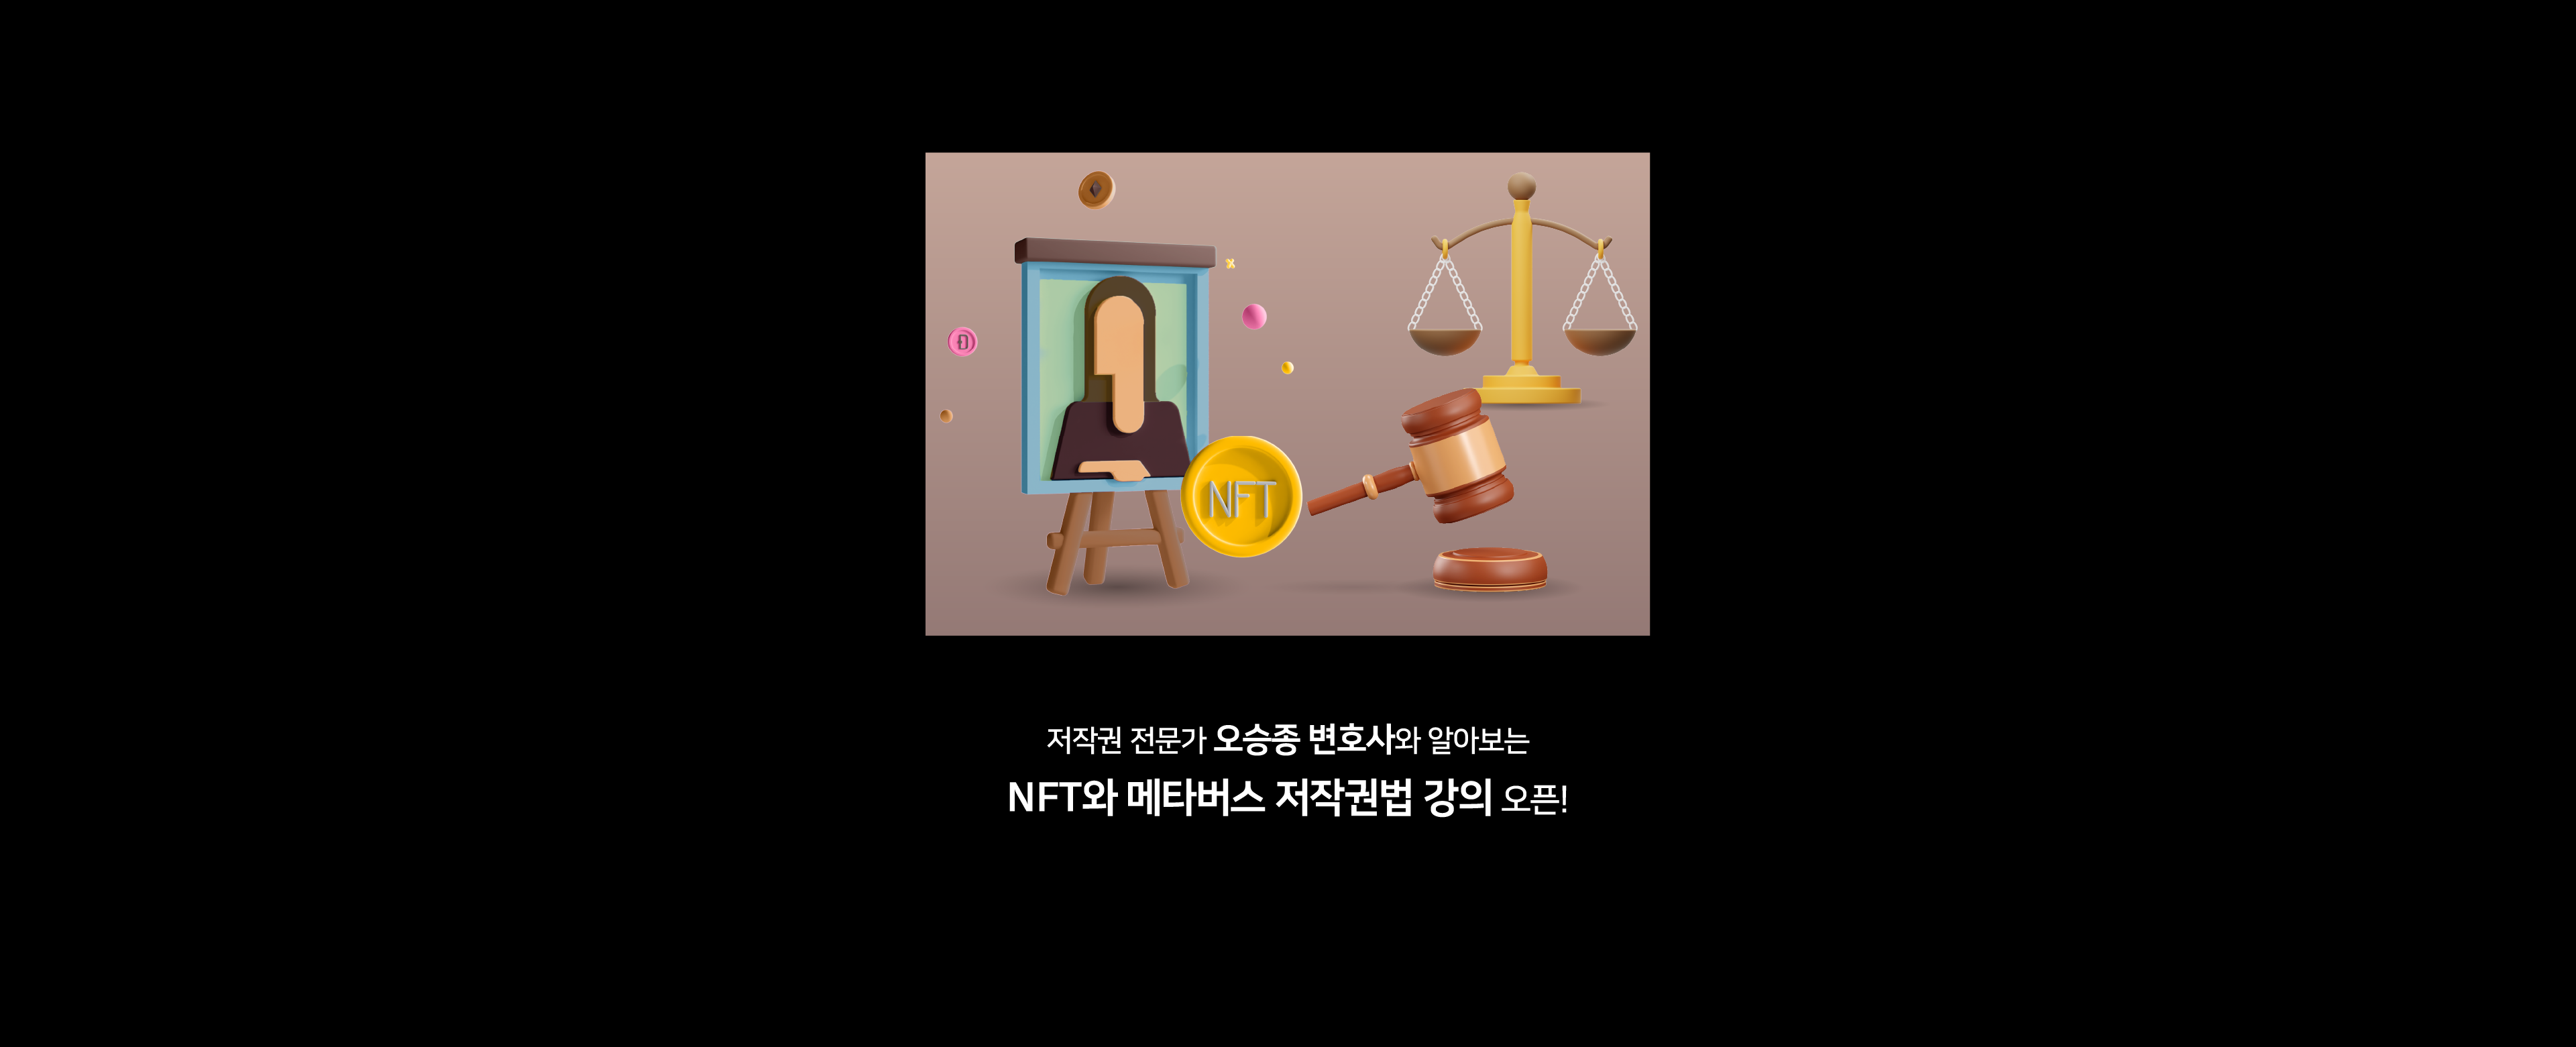 NFT와 메타버스 저작권법